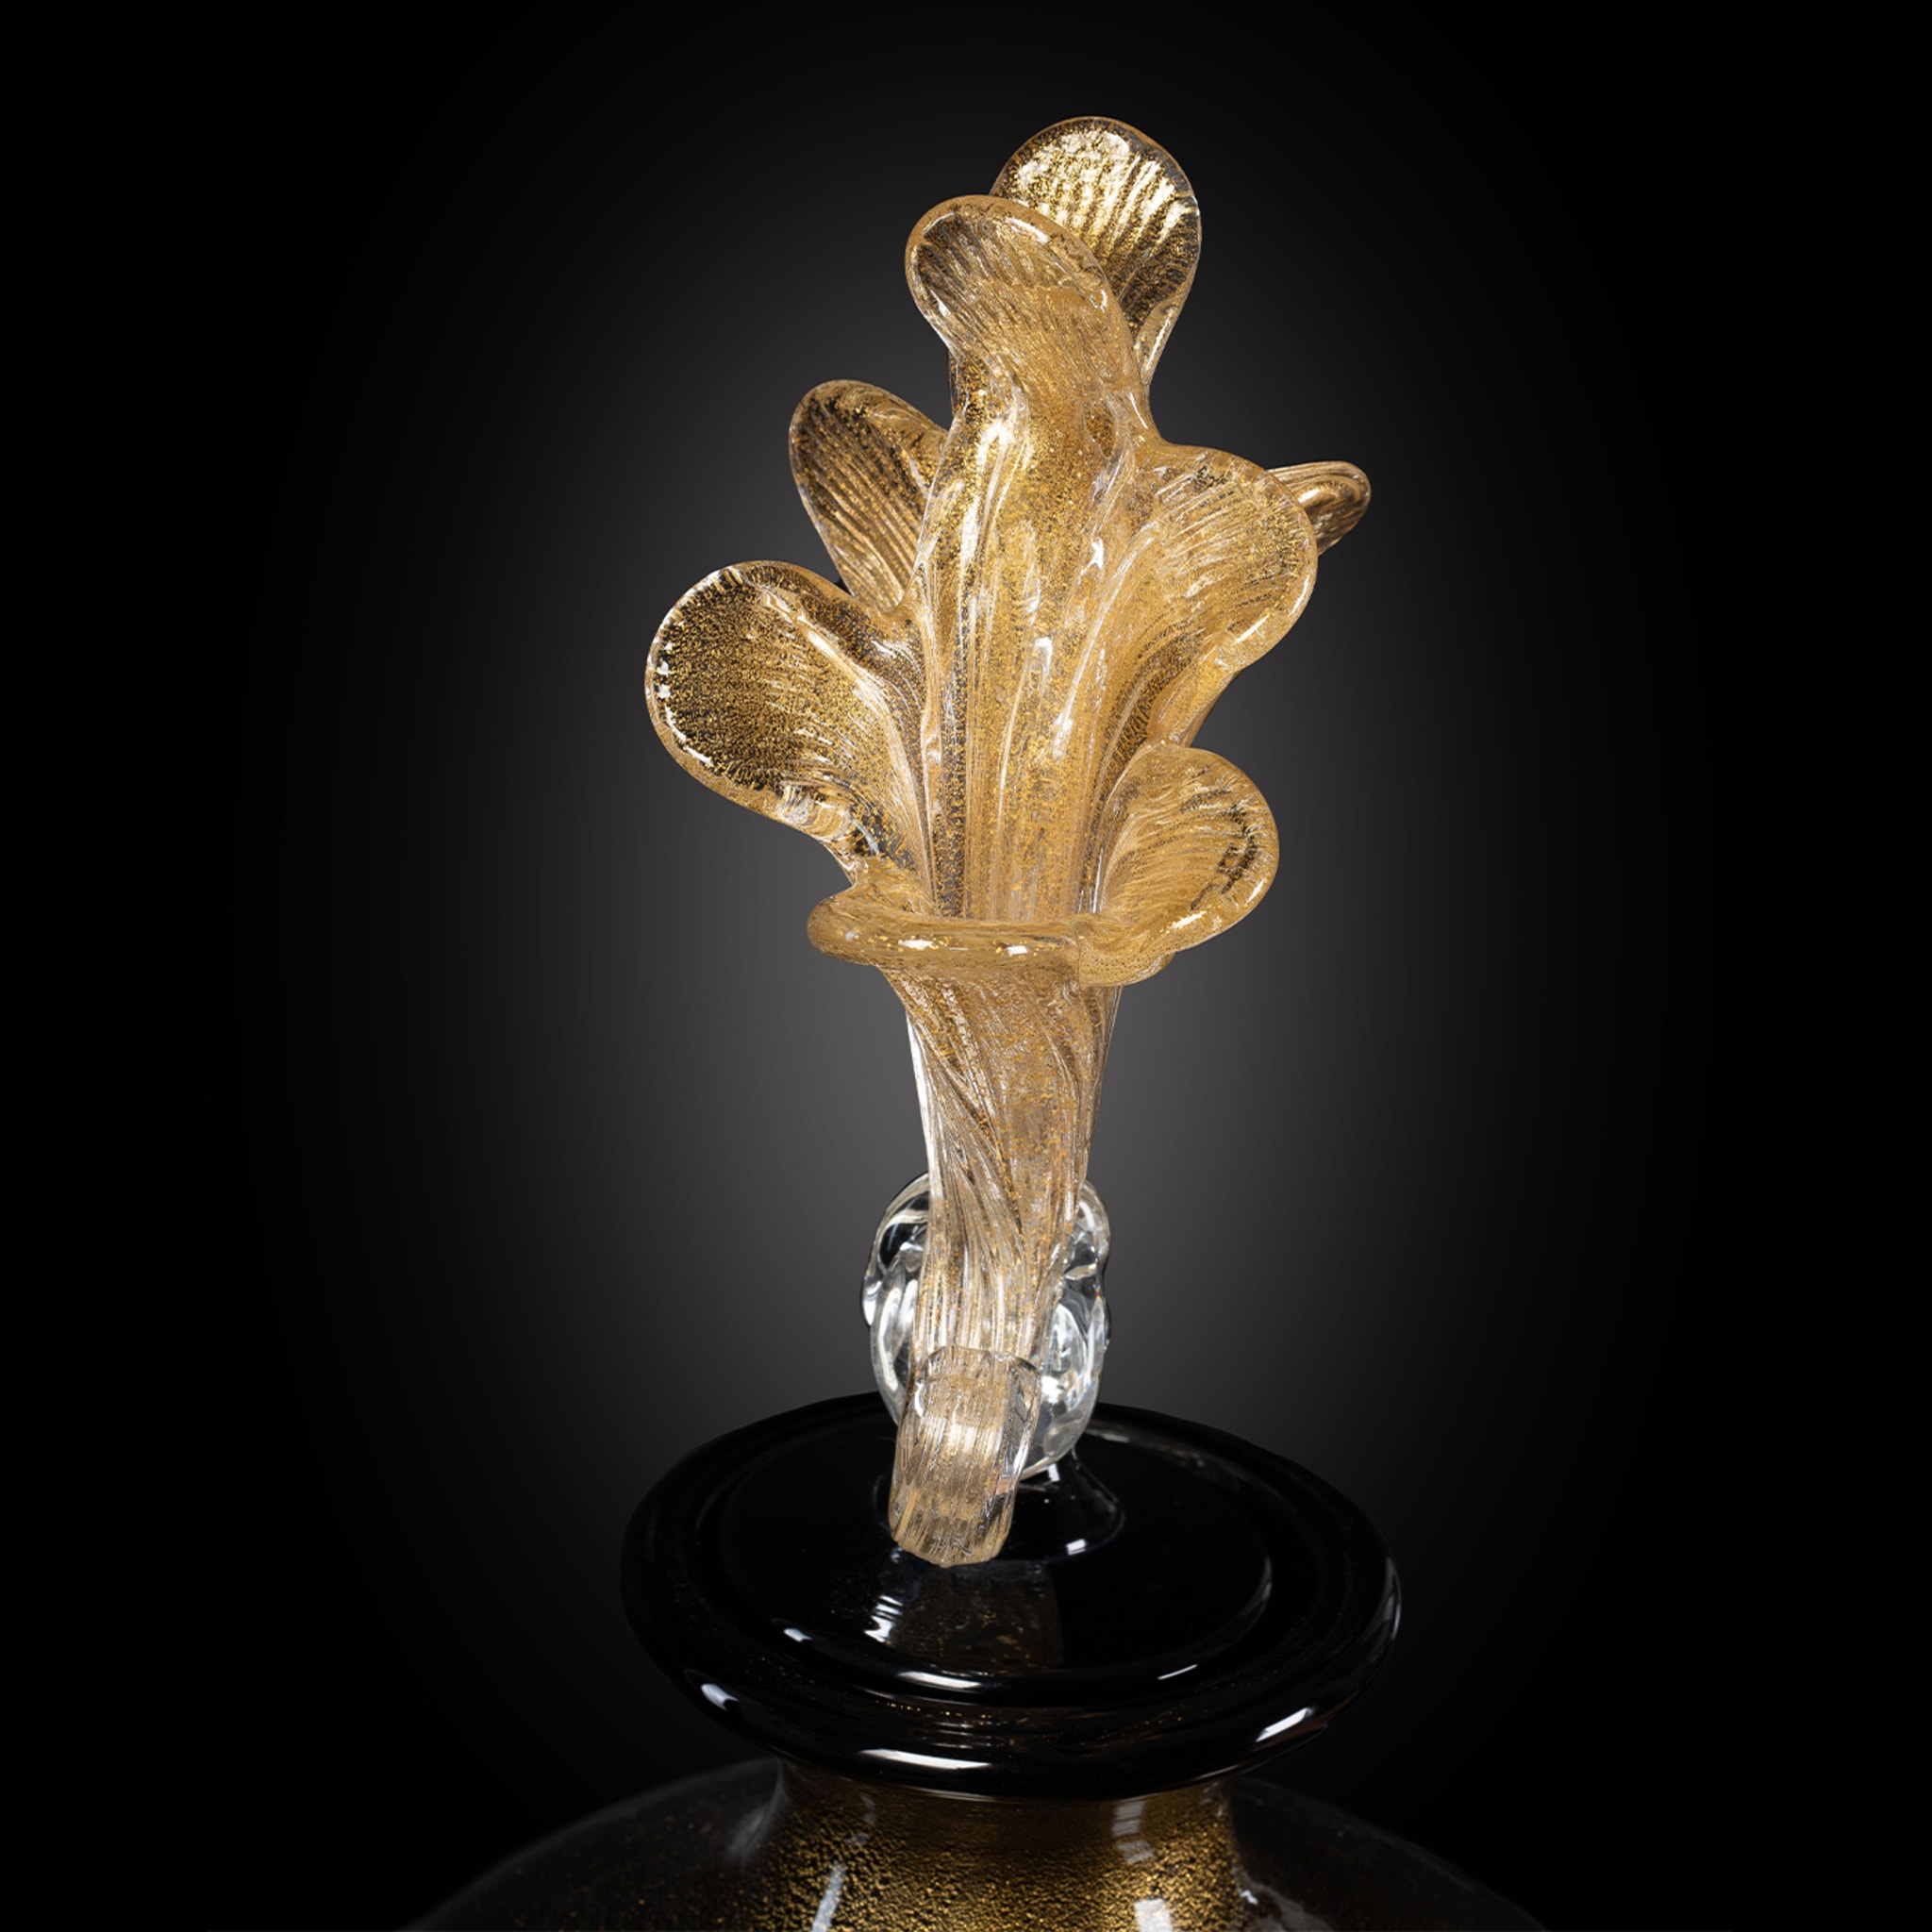 Stmat 24K Black & Gold Footed Vase with Lid - Alternative view 5